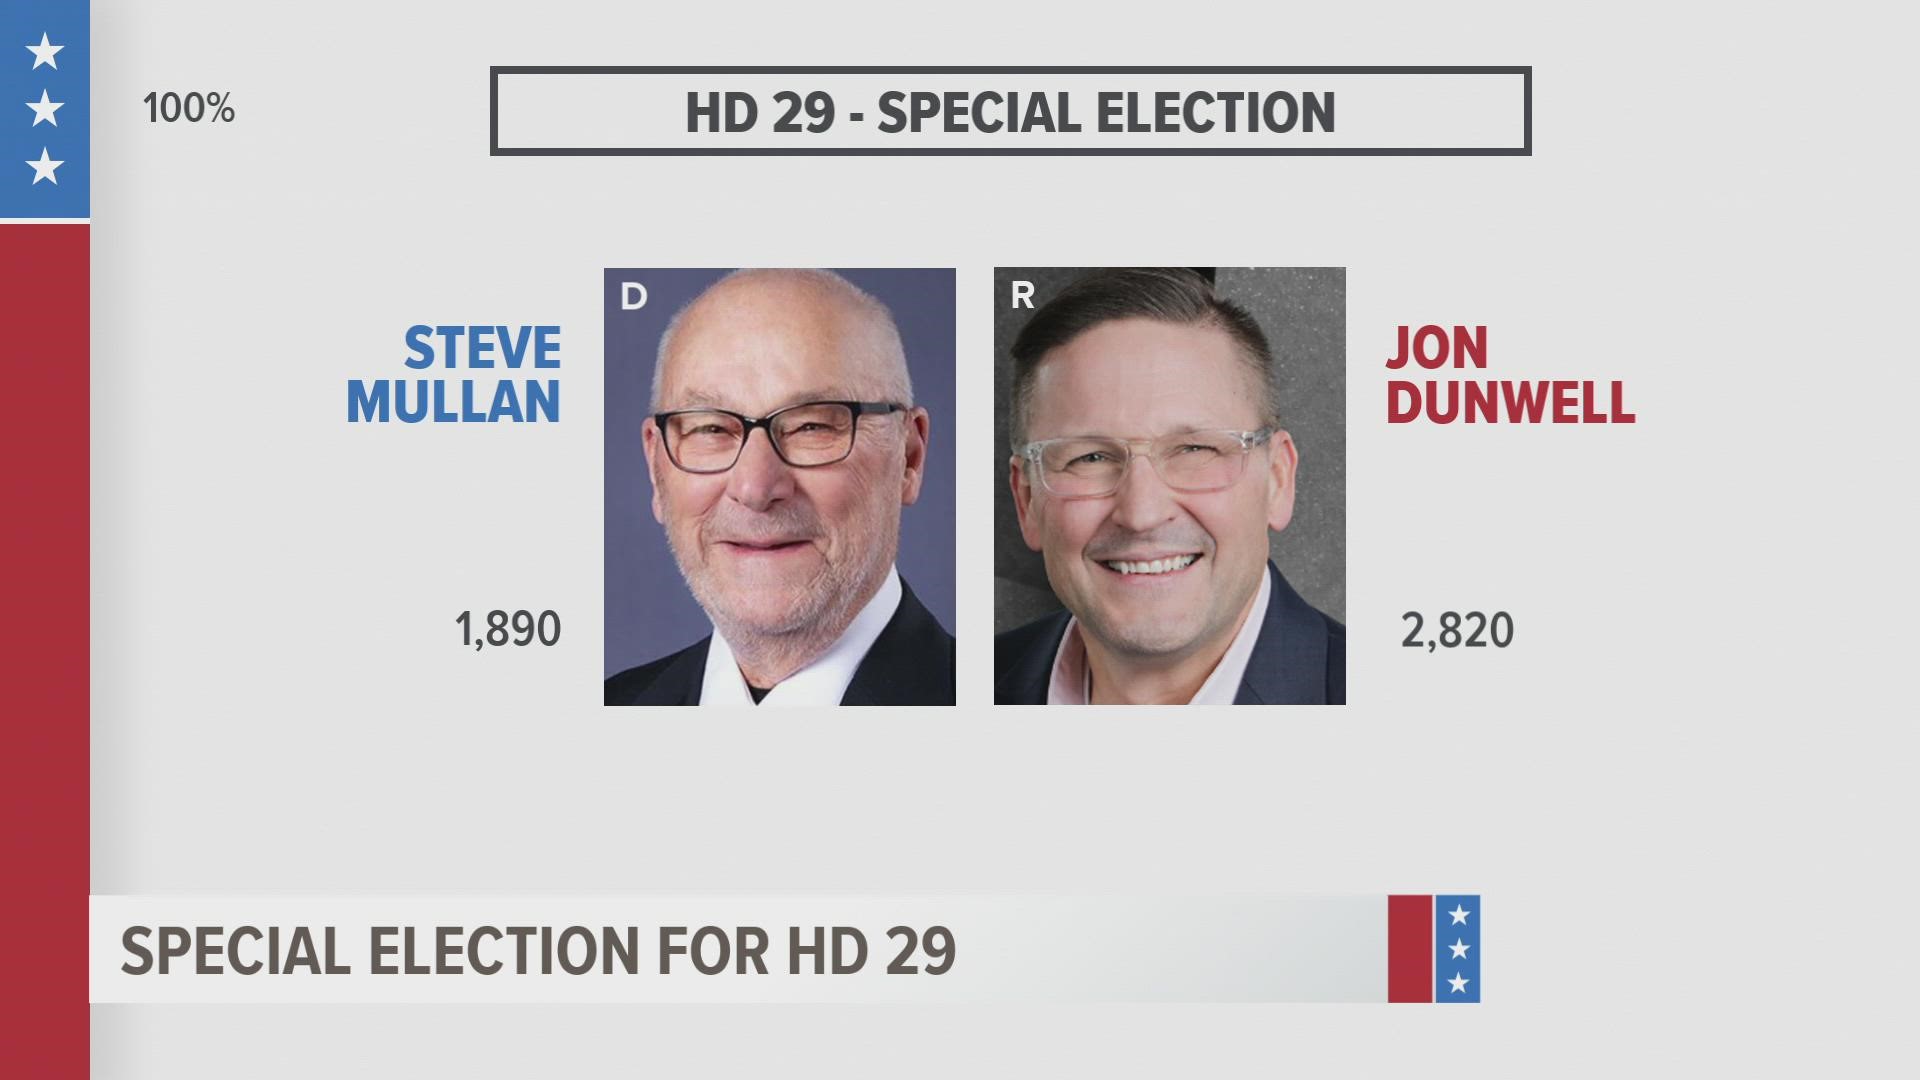 Iowa Secretary of State Paul Pate tweeted that Dunwell had 2,820 votes while Democrat Steve Mullan had 1,890.